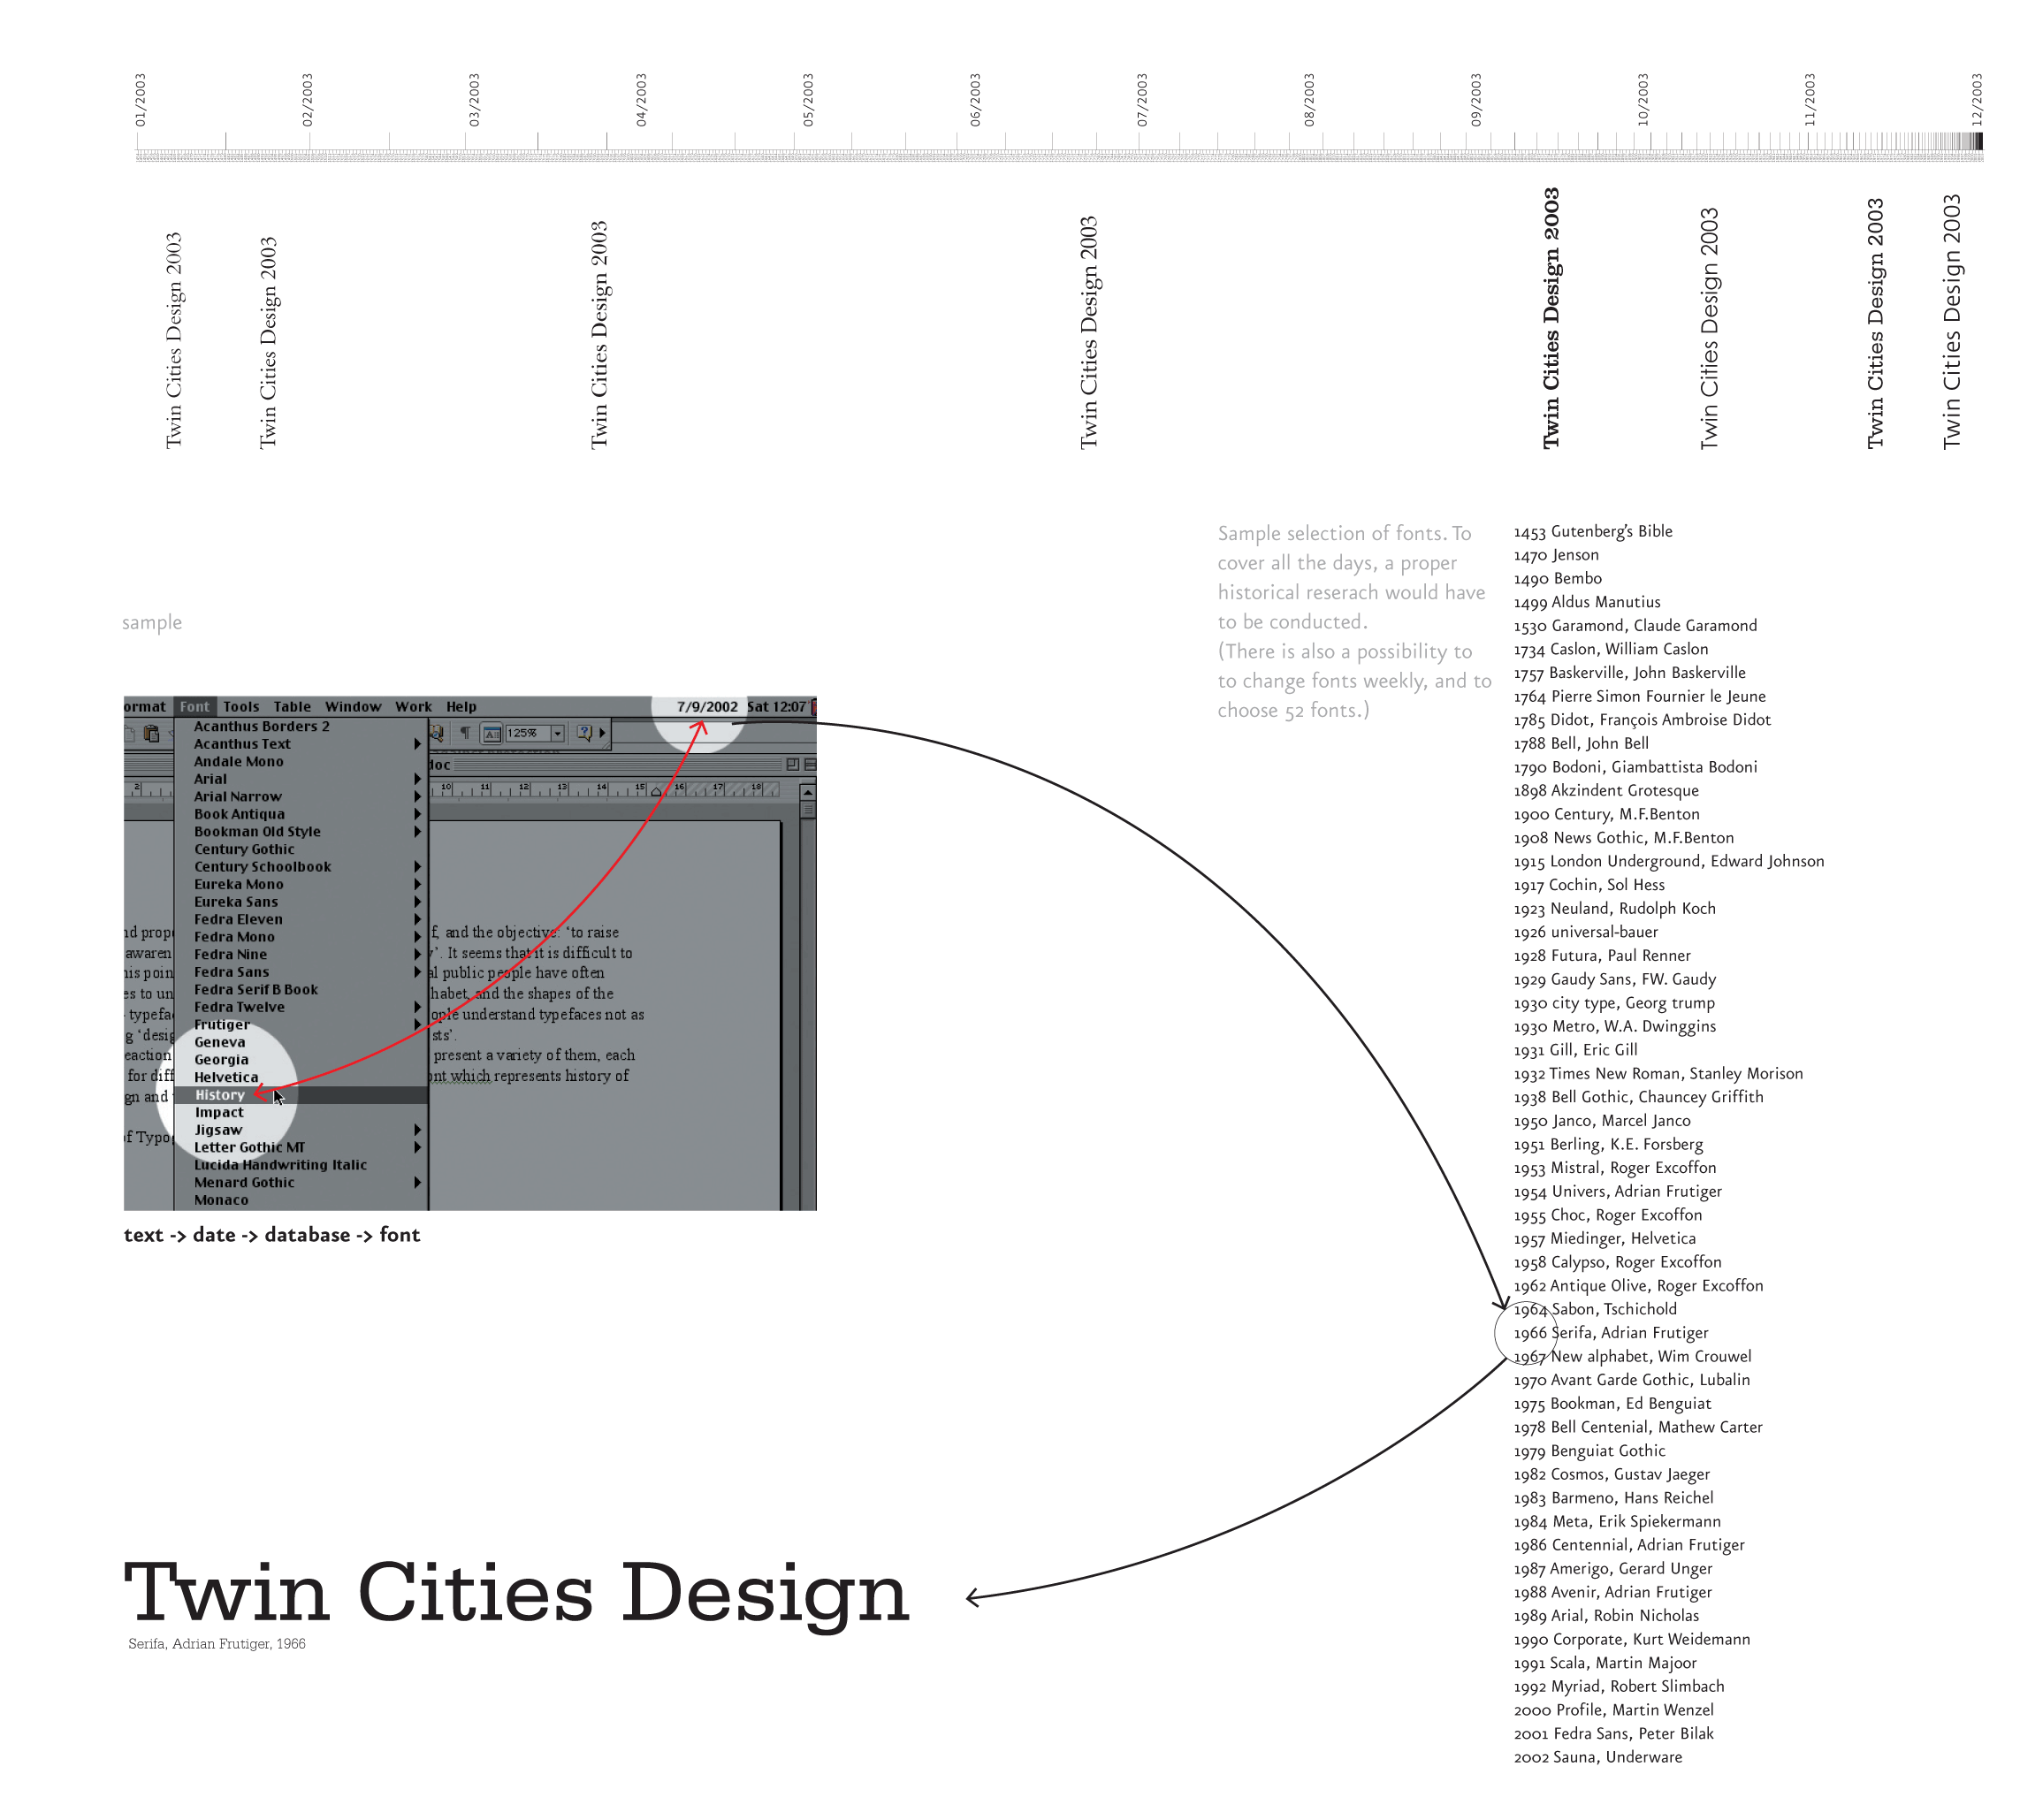 Proposal for the Design Institute Minneapolis, 2002